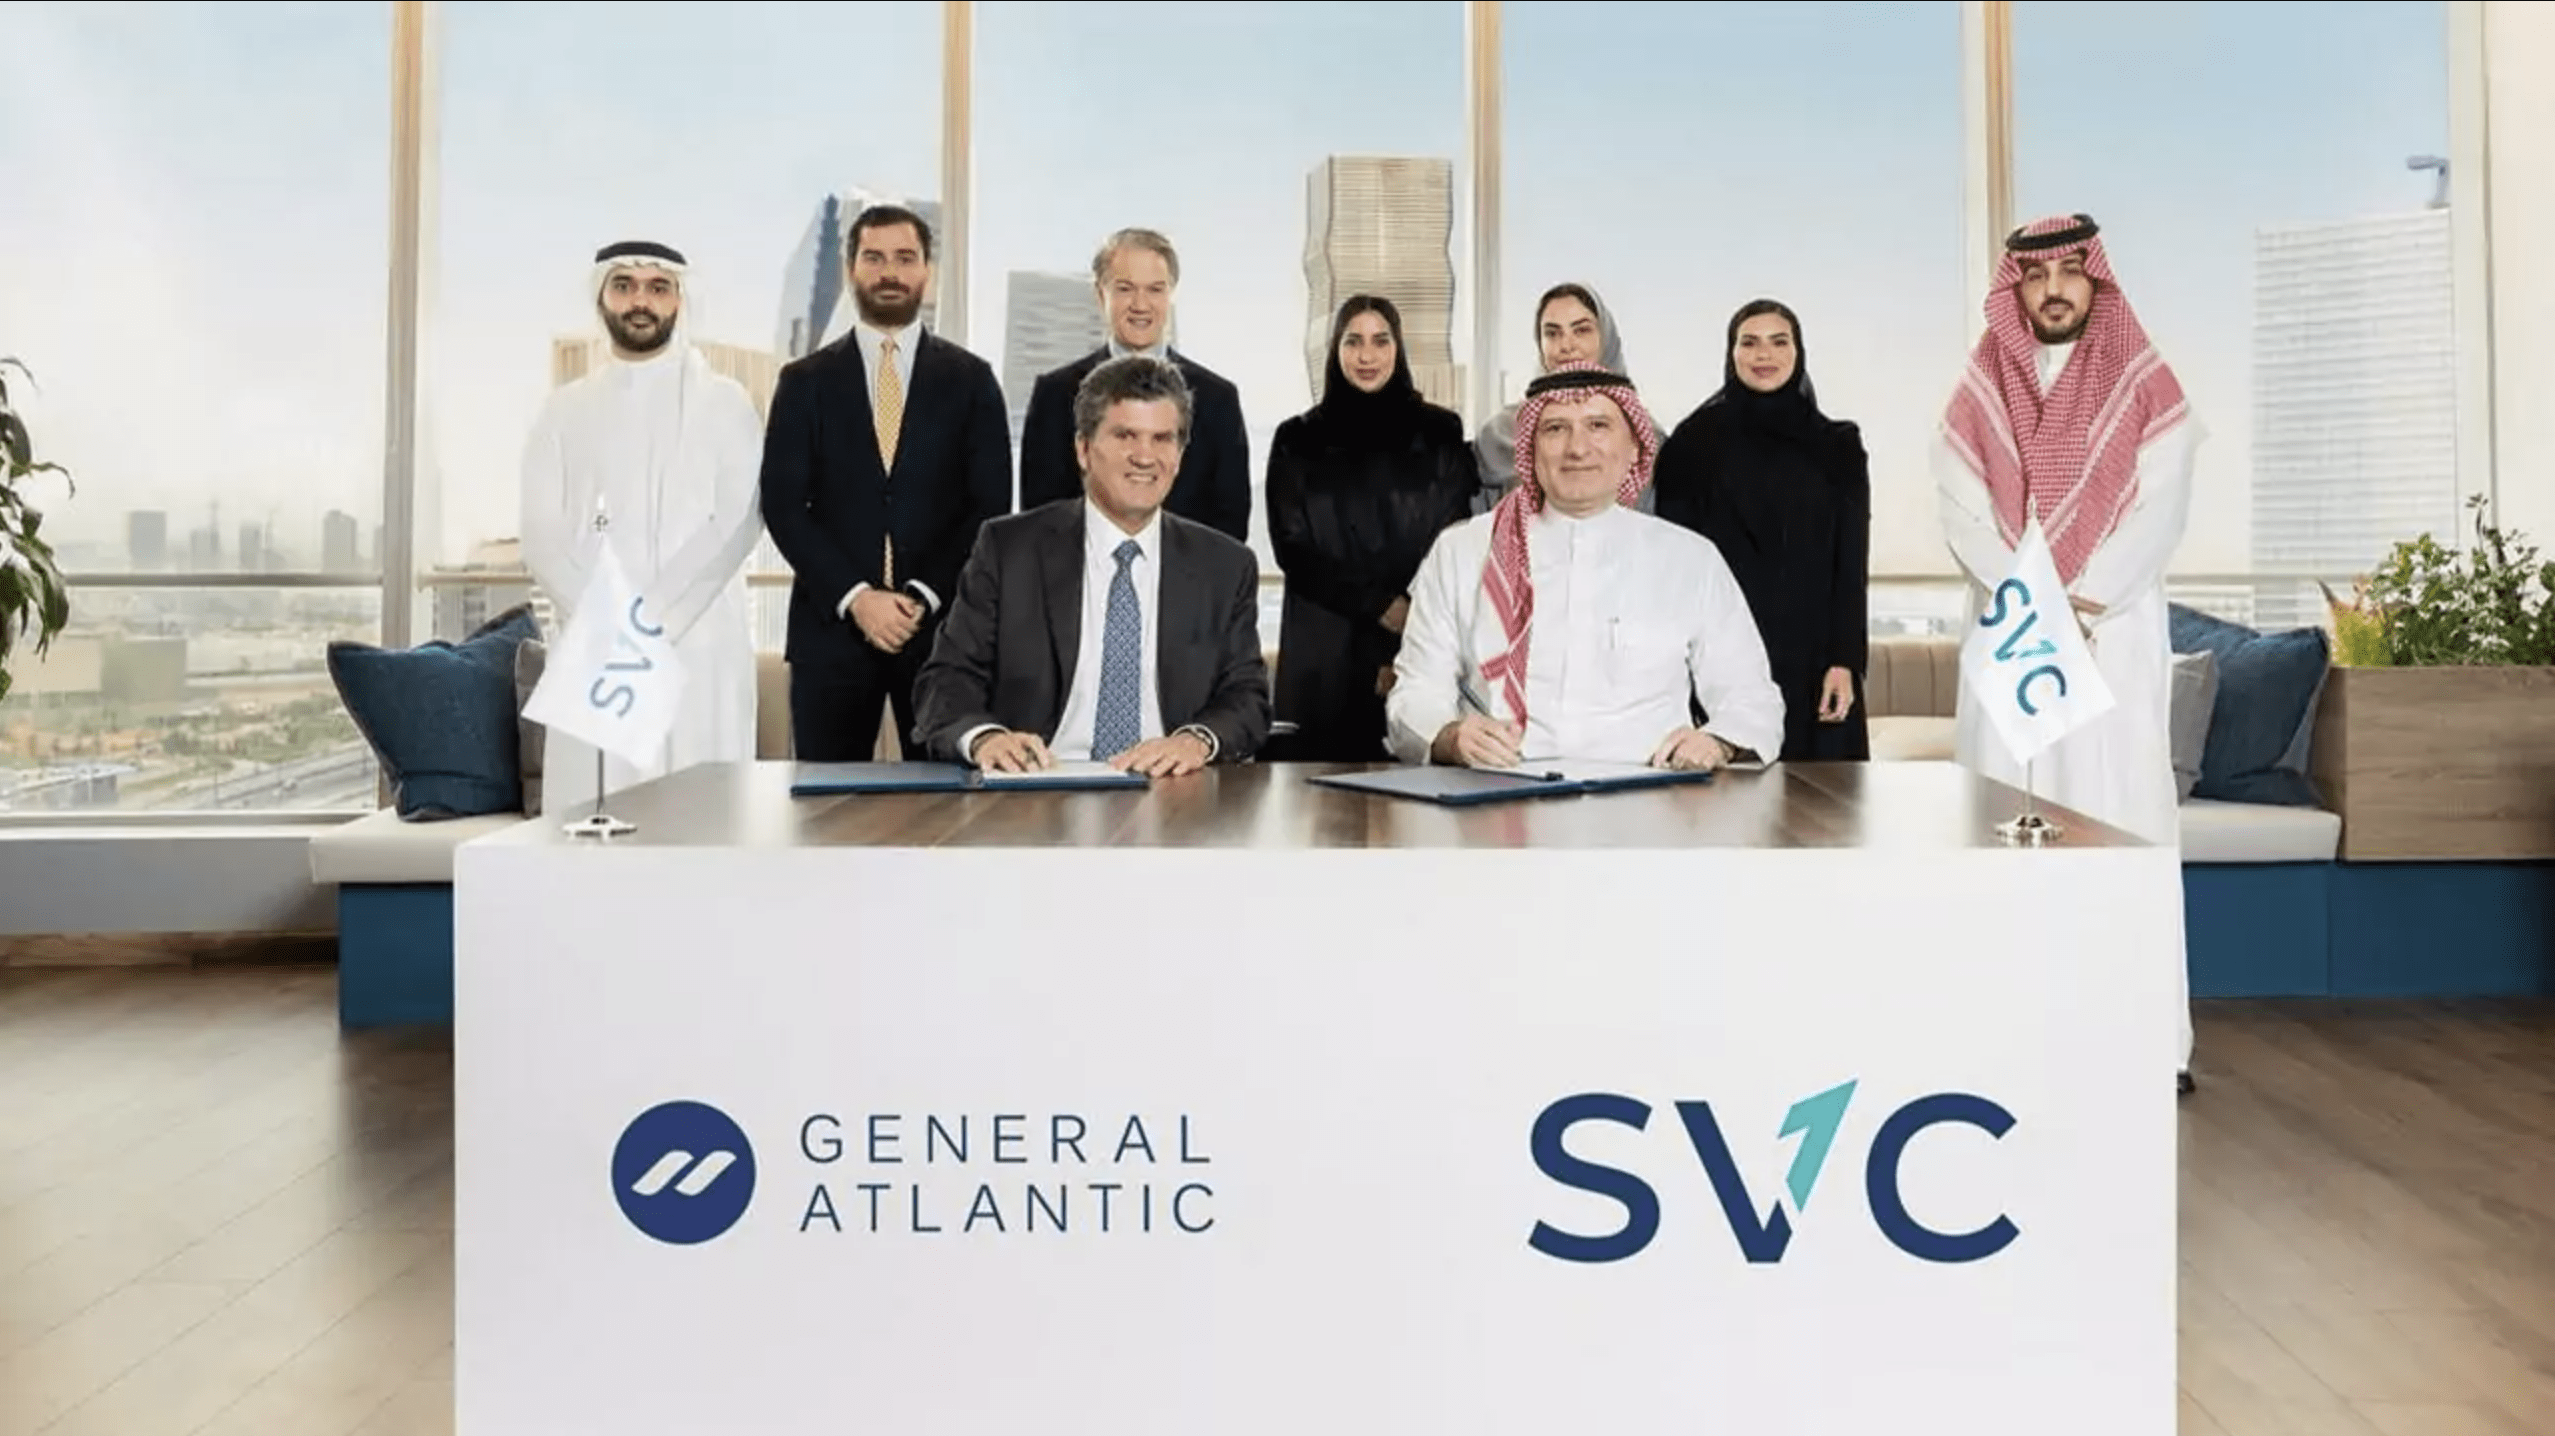 Saudi Venture Capital invests $30m in General Atlantic's growth fund